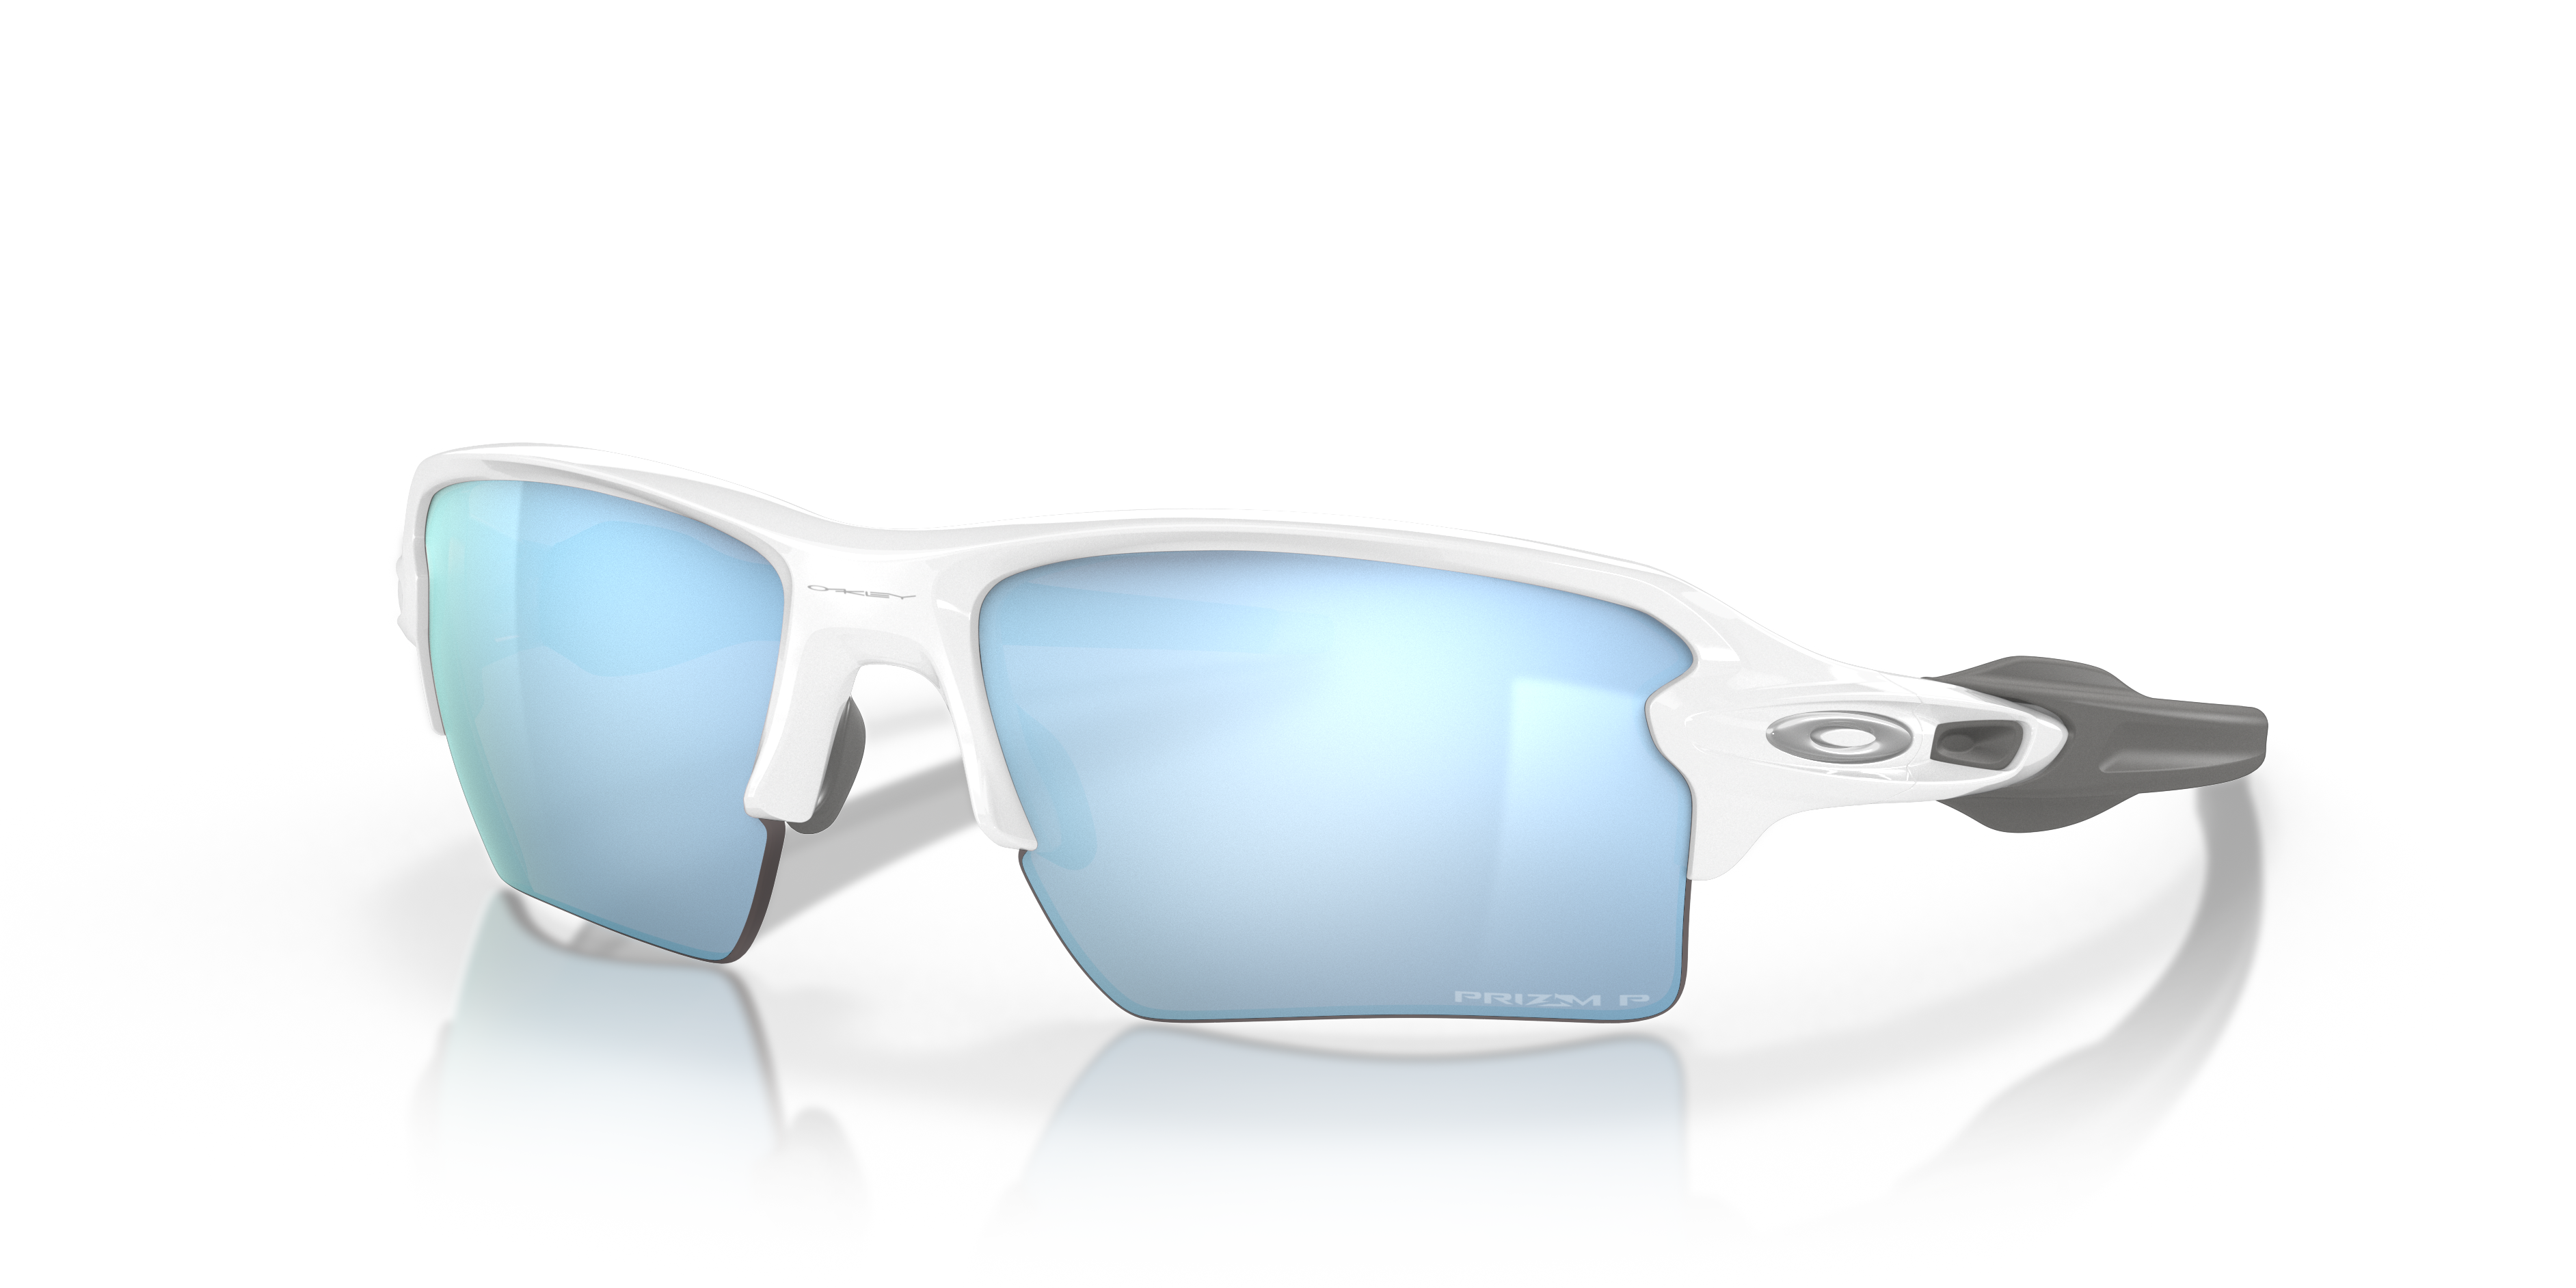 oakley polarized flak 2.0 sunglasses